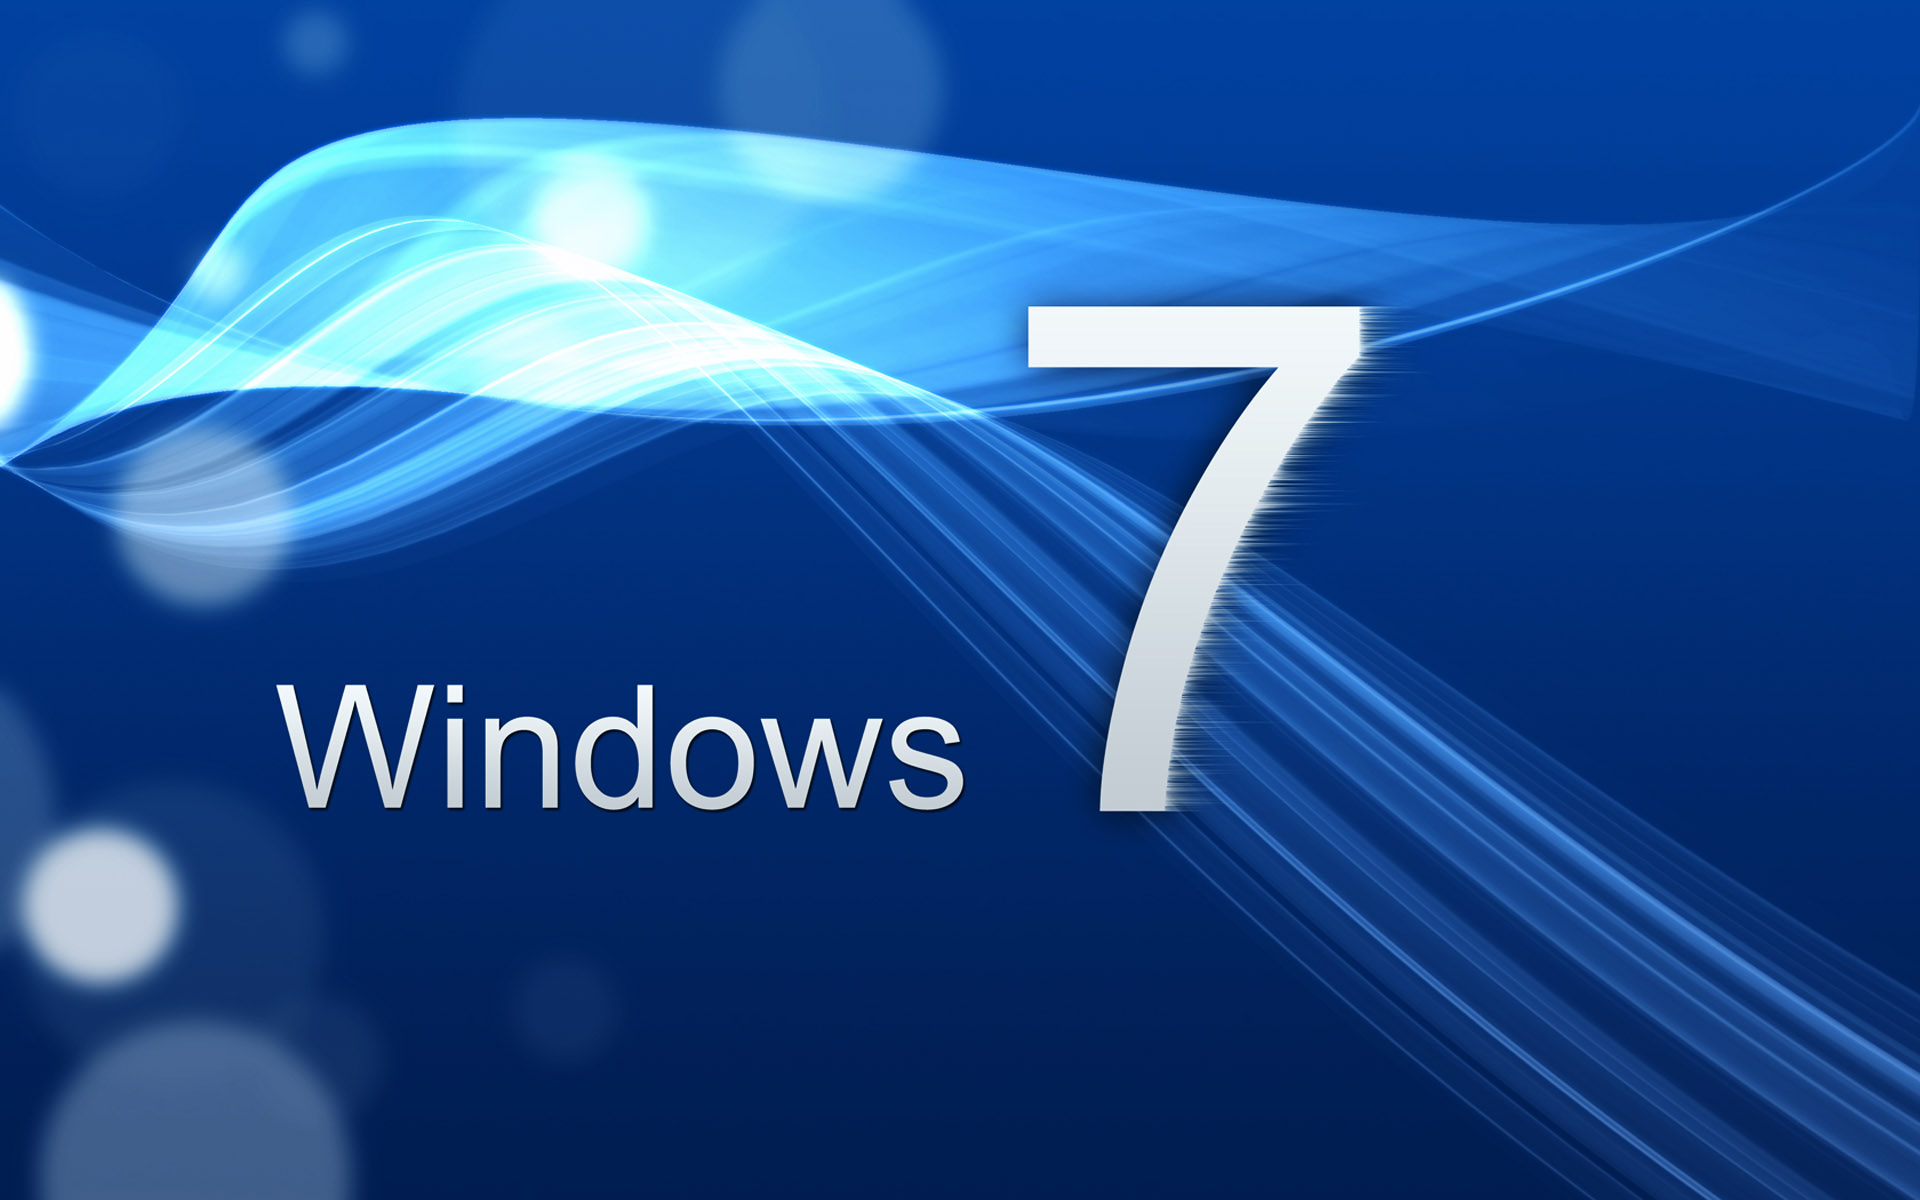 Computers Windows 7 Windows 7 OS 018623 jpg